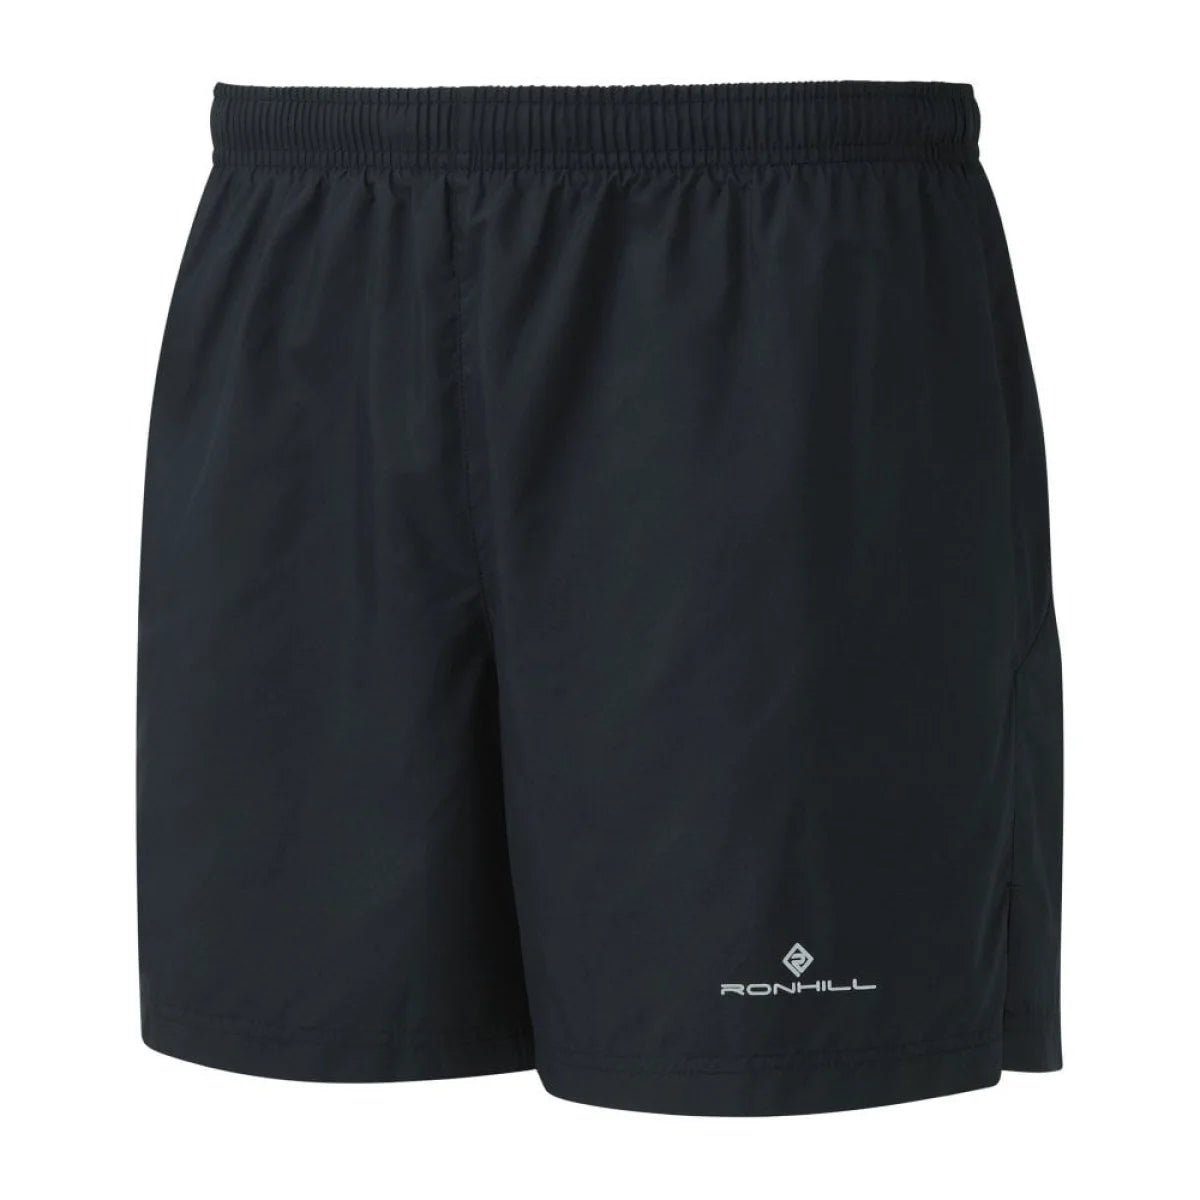 Men's Ronhill Core 5" Shorts